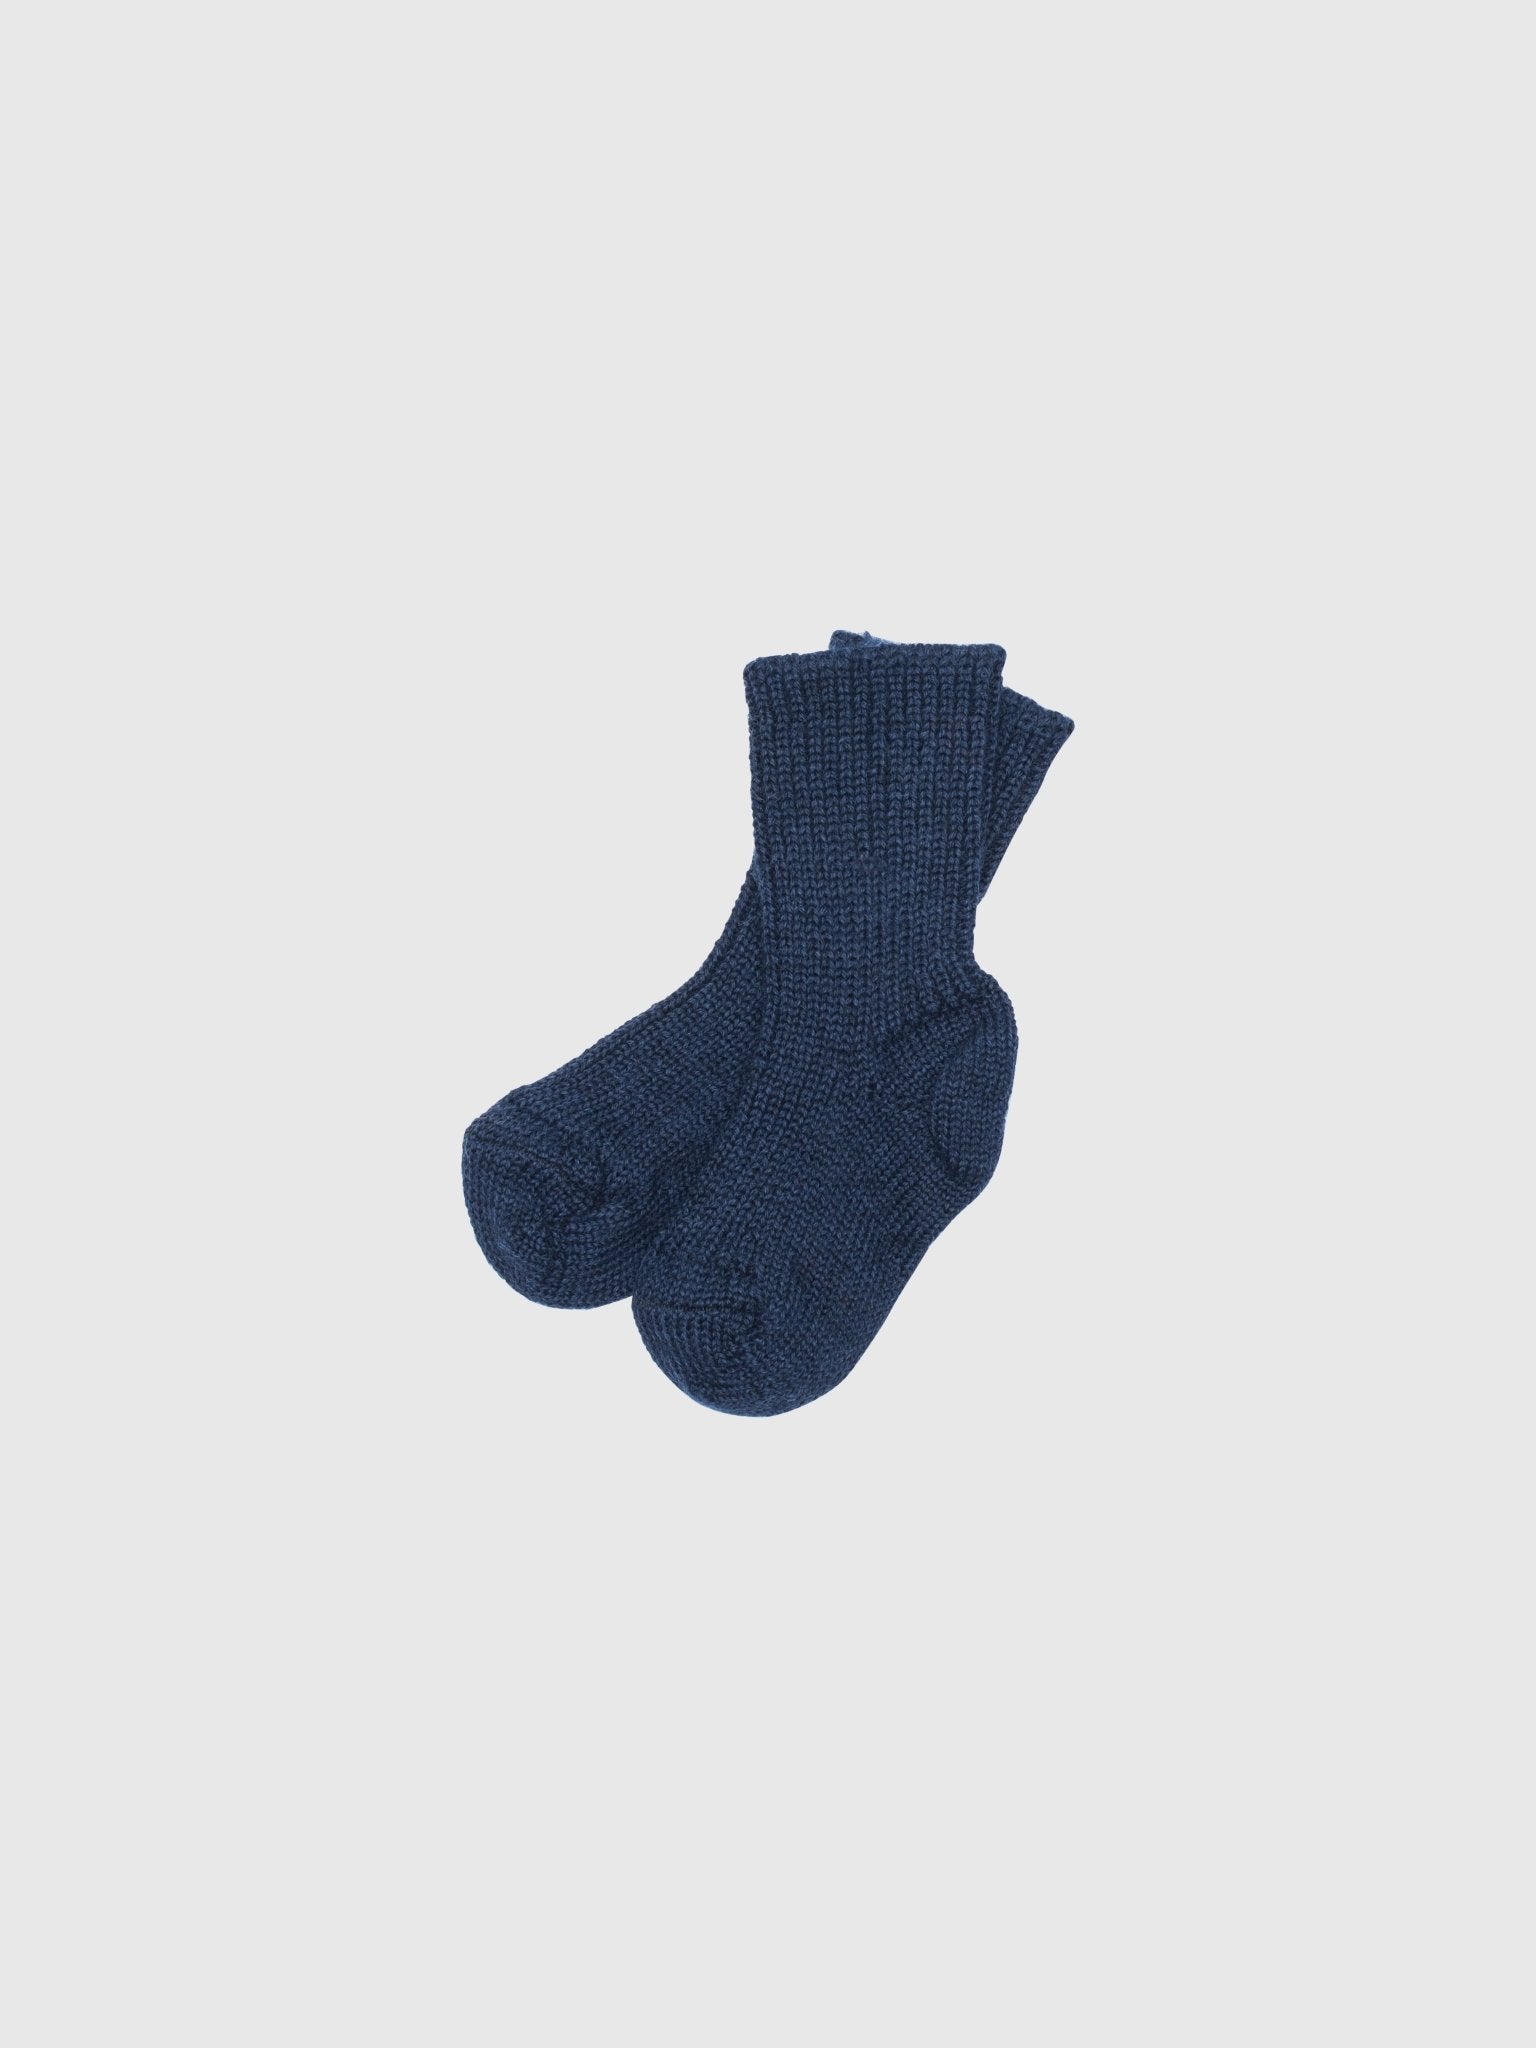 organic merino wool socks - red, navy and natural - LILA.US